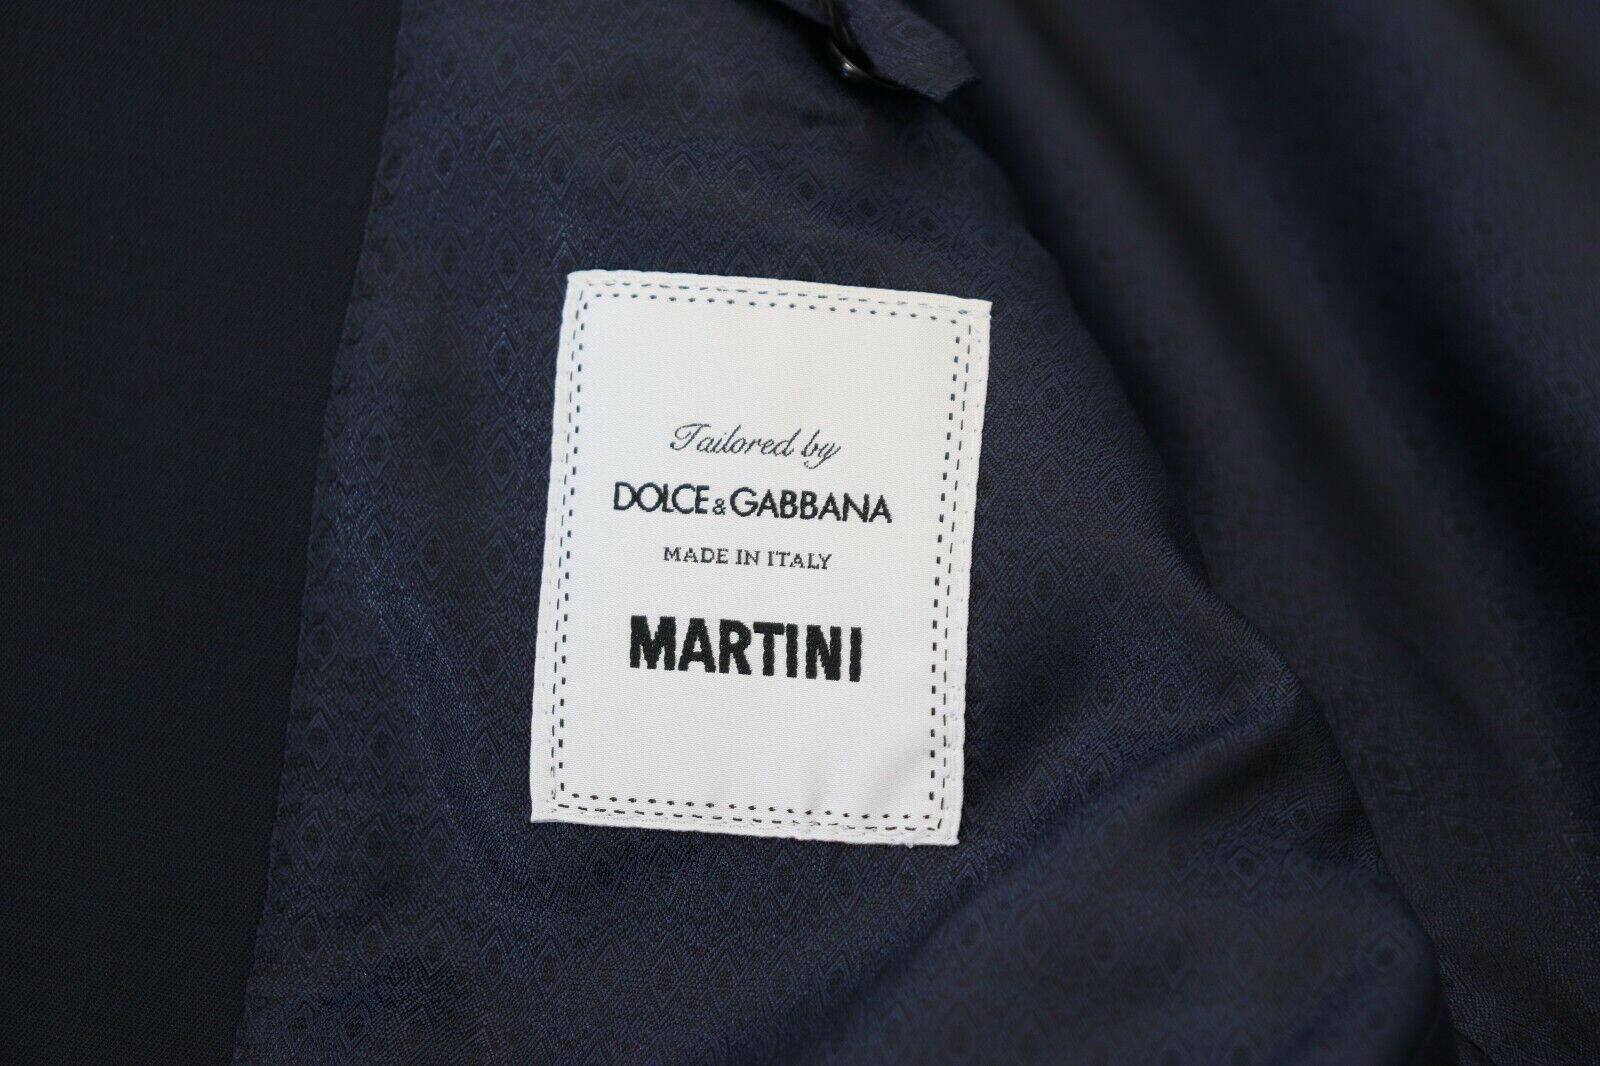 Dolce & Gabbana Dark Blue Wool Single Breasted MARTINI Blazer - GENUINE AUTHENTIC BRAND LLC  